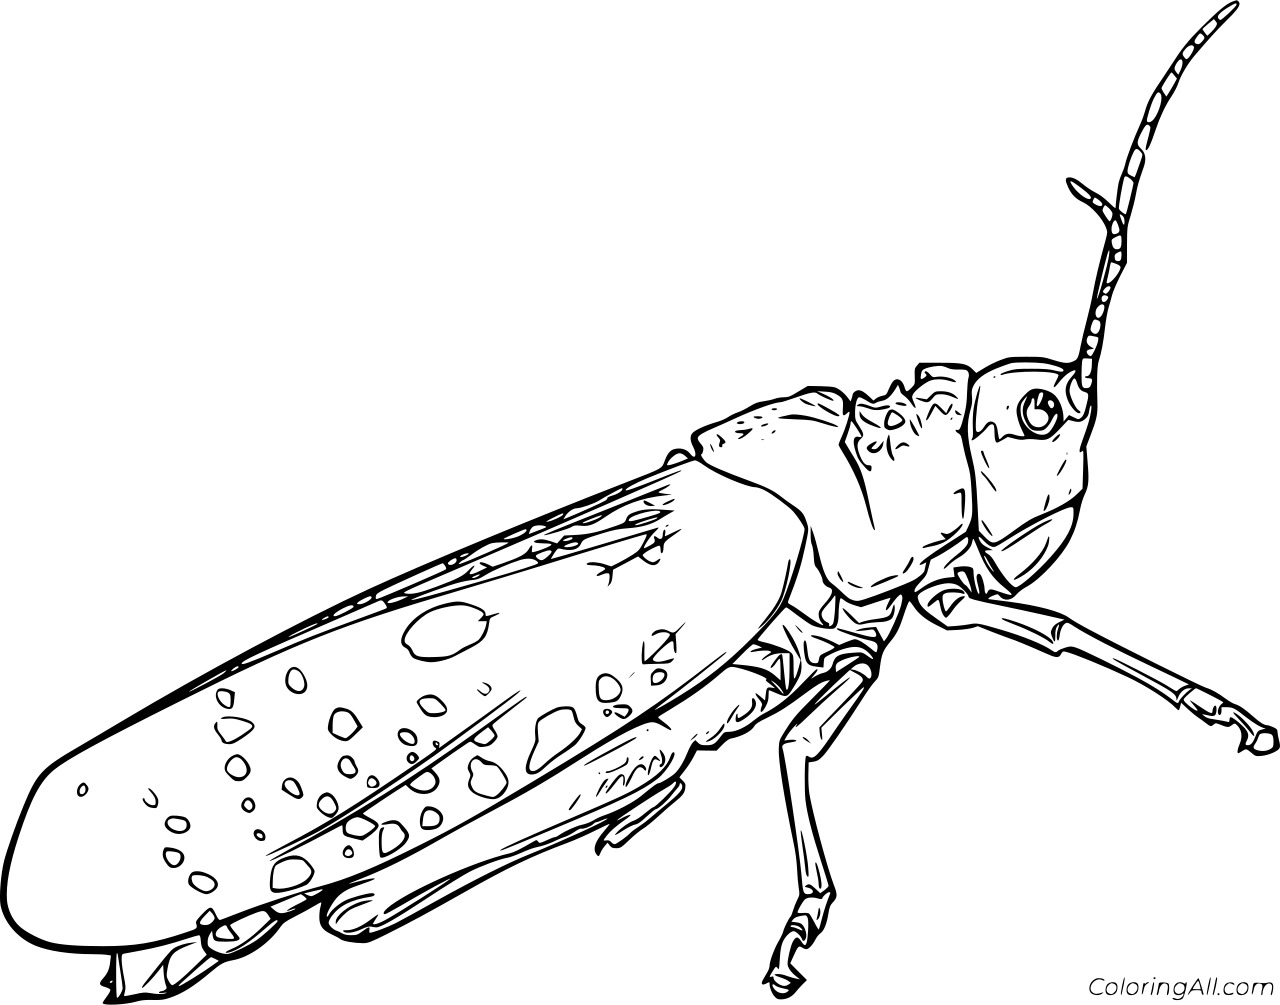 Big Realistic Grasshopper Coloring Page